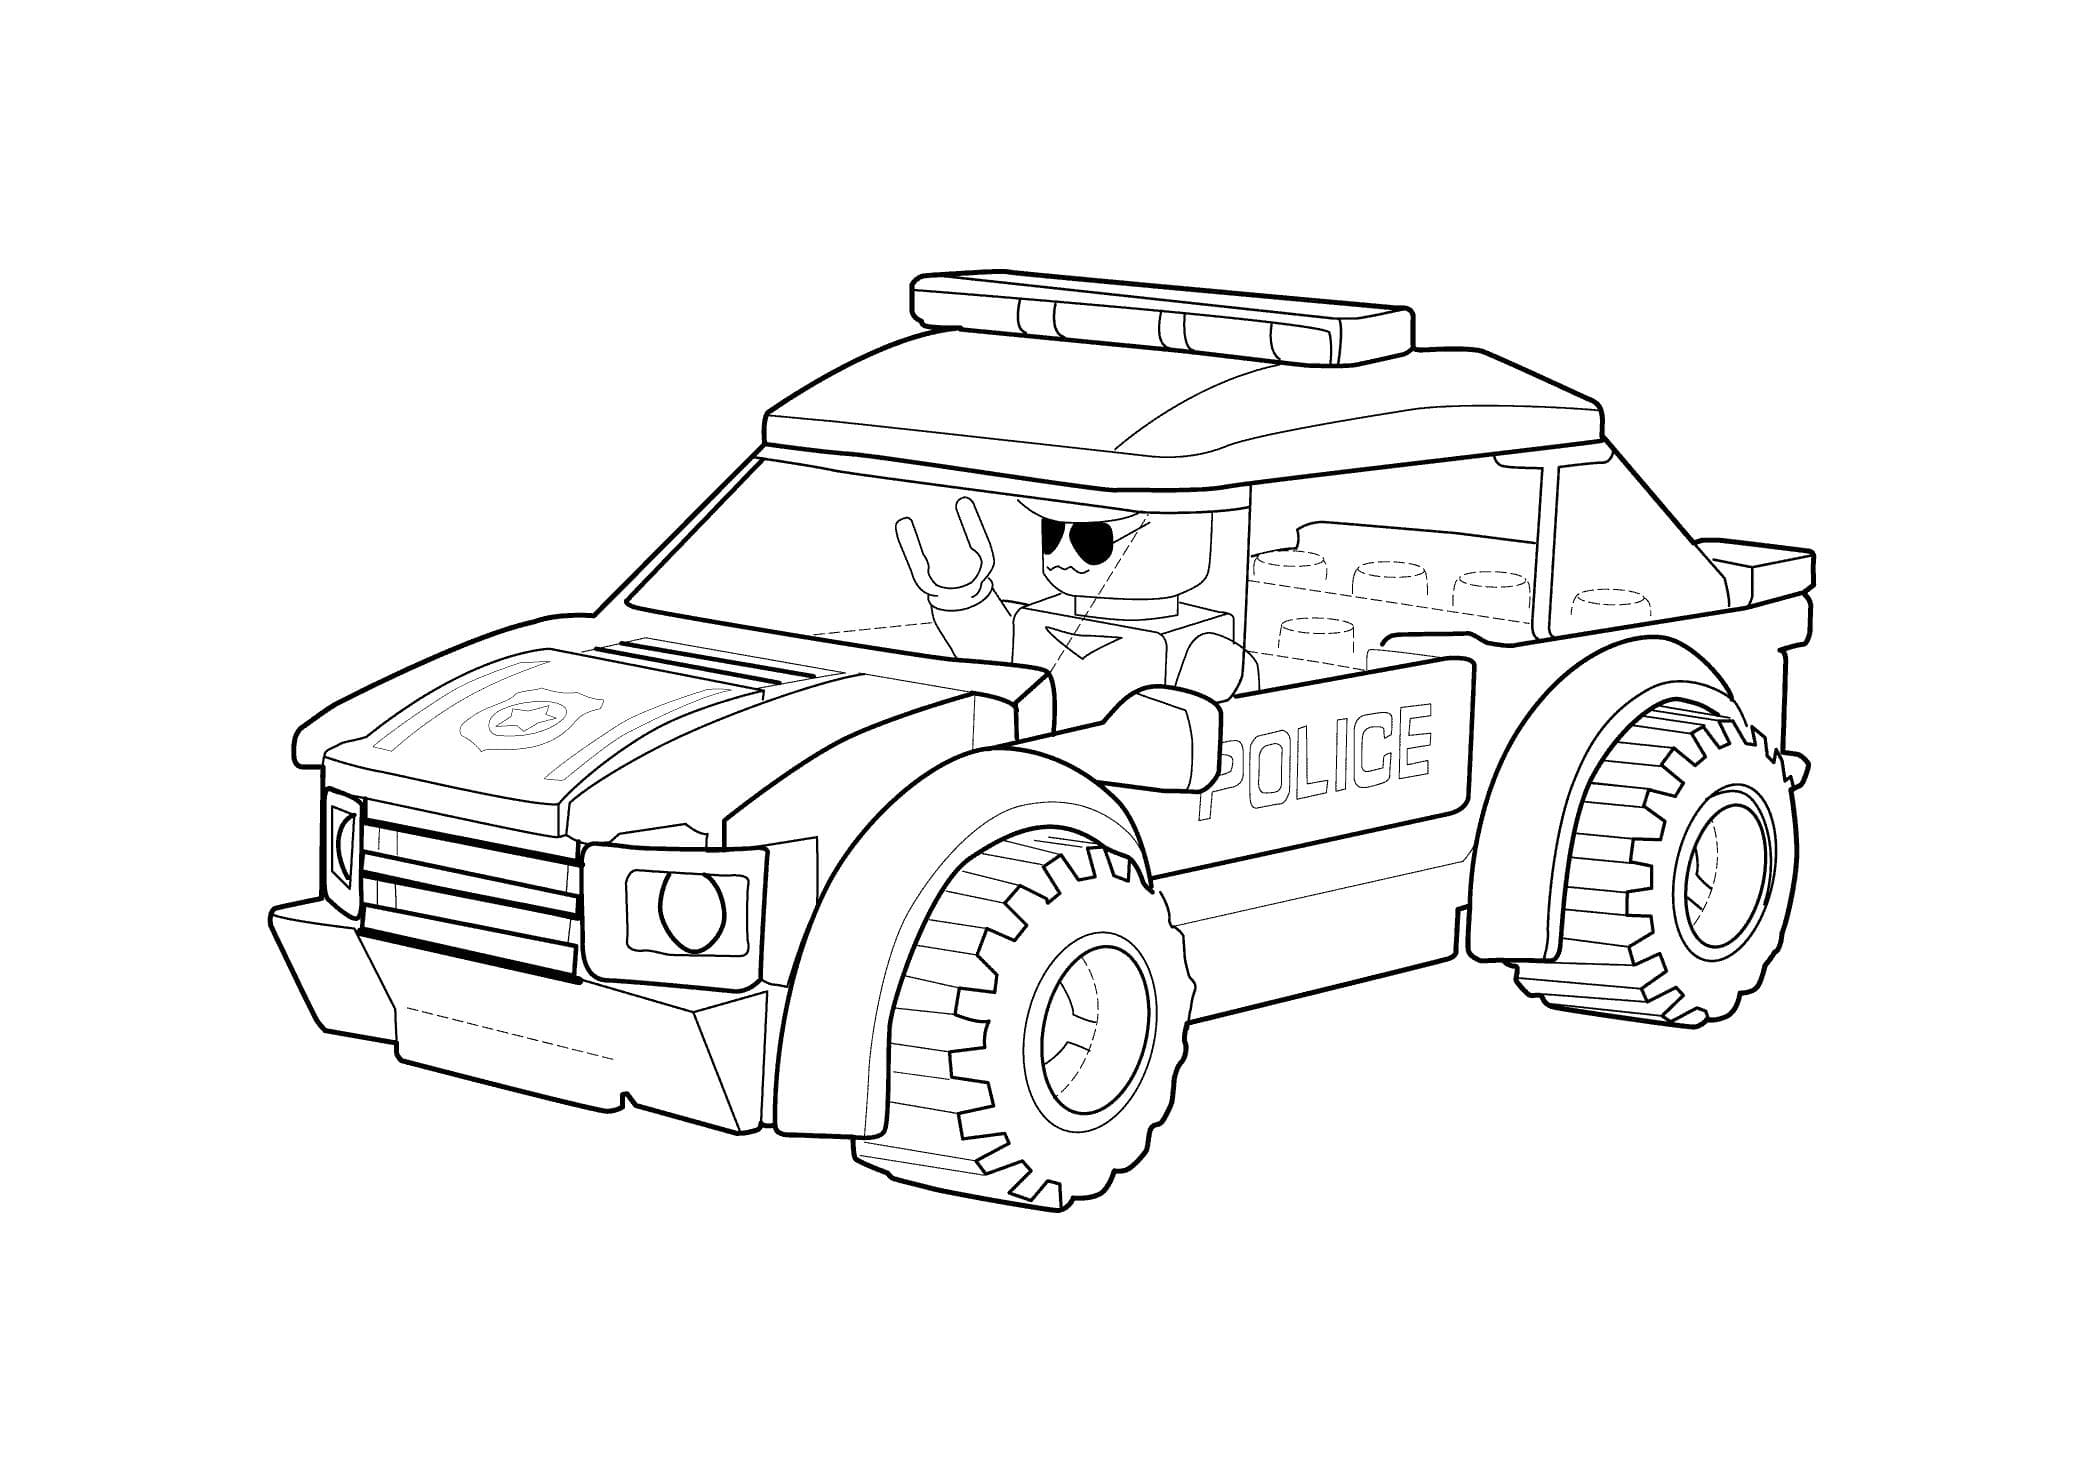 Раскраска Лего машины. Раскраска 26